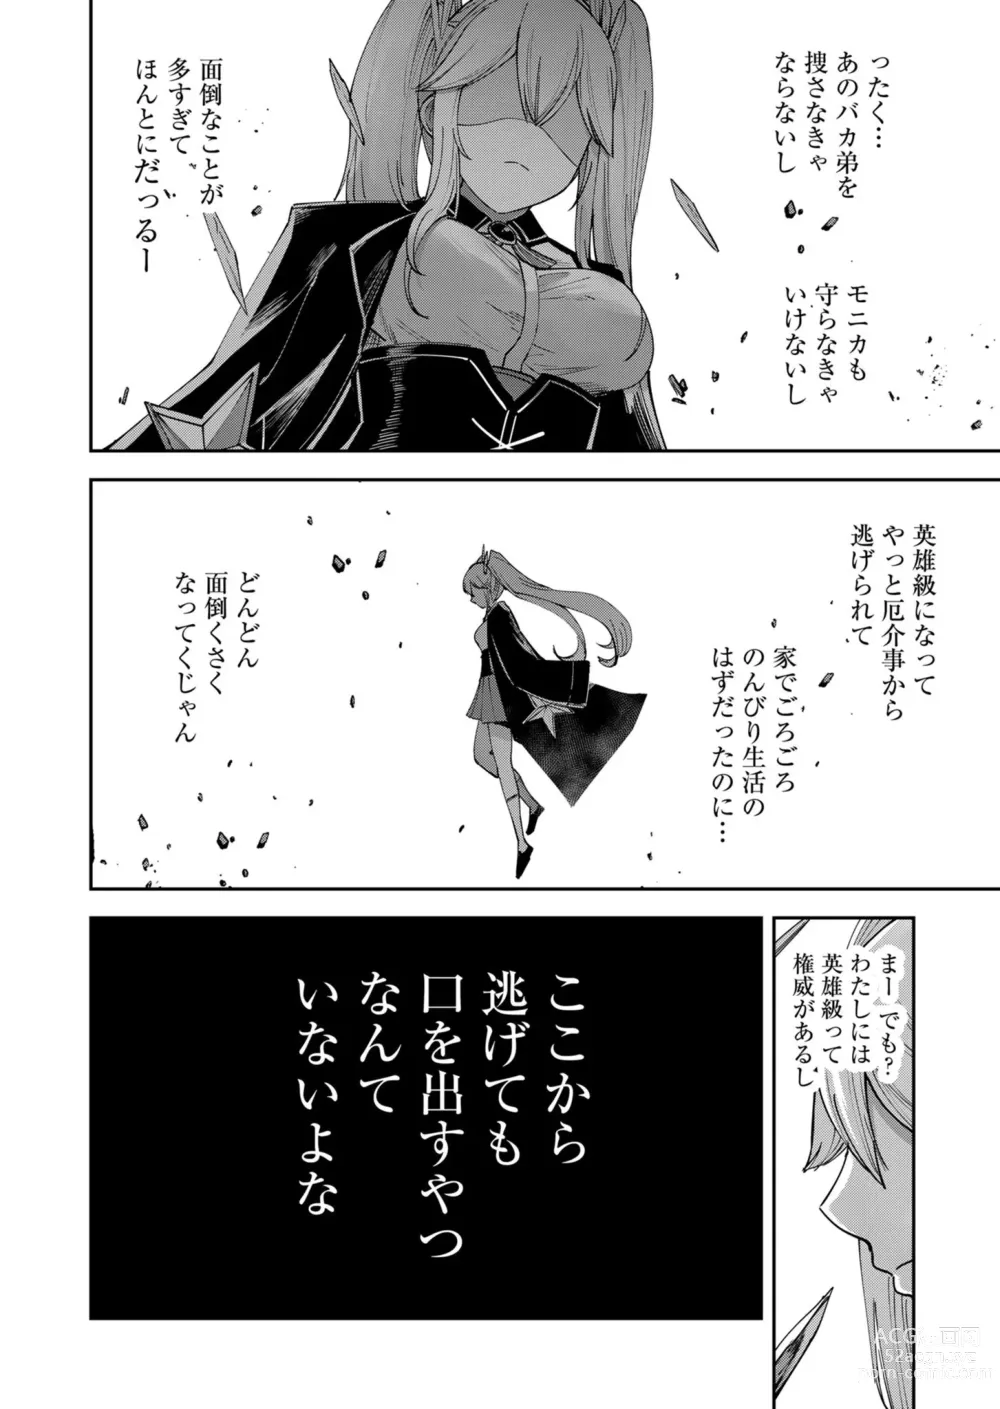 Page 18 of manga Kichiku Eiyuu Vol.05